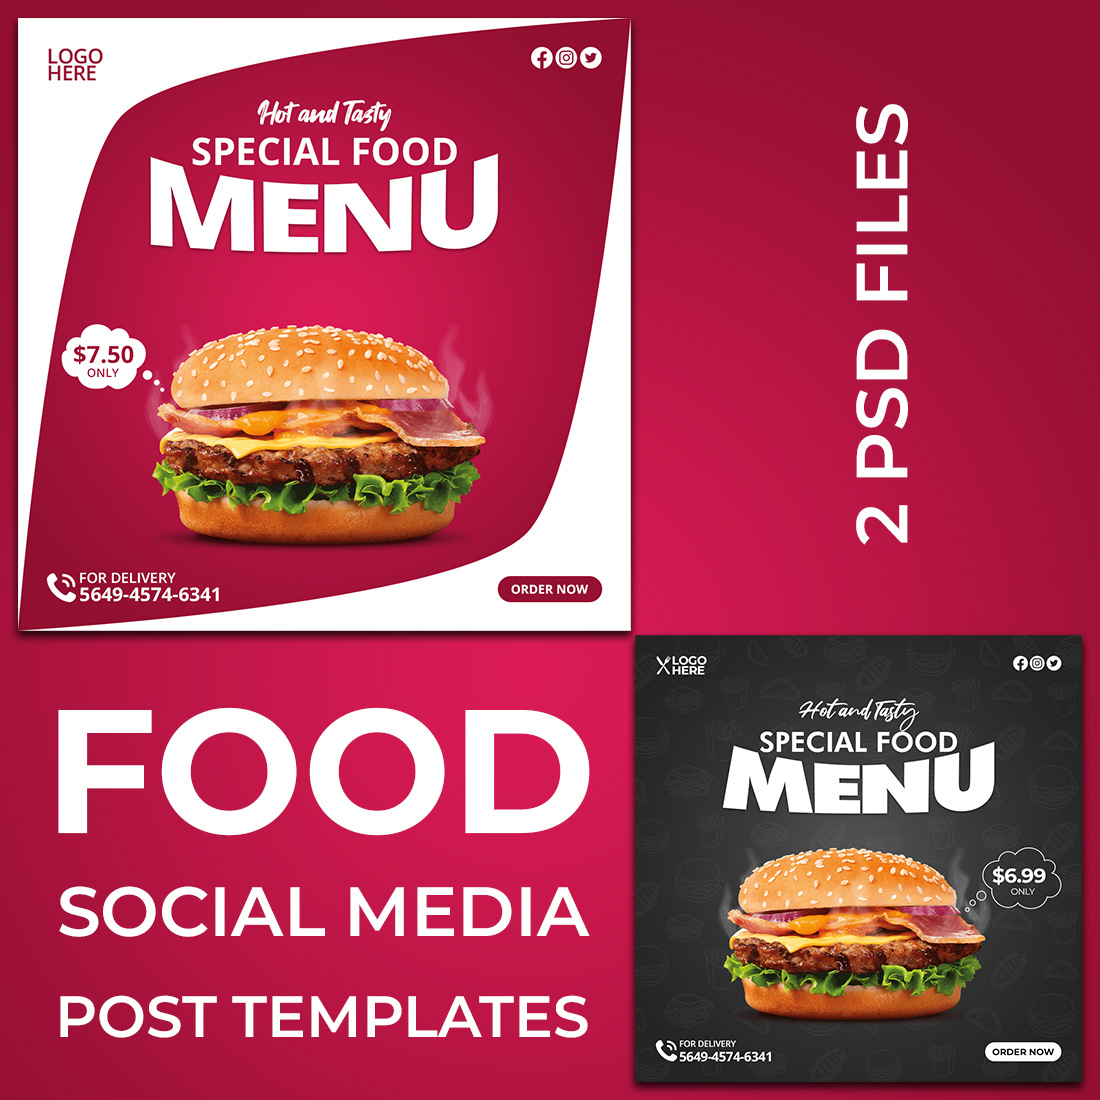 2 Special Food Menu Restaurant Social Media Banner Templates cover image.